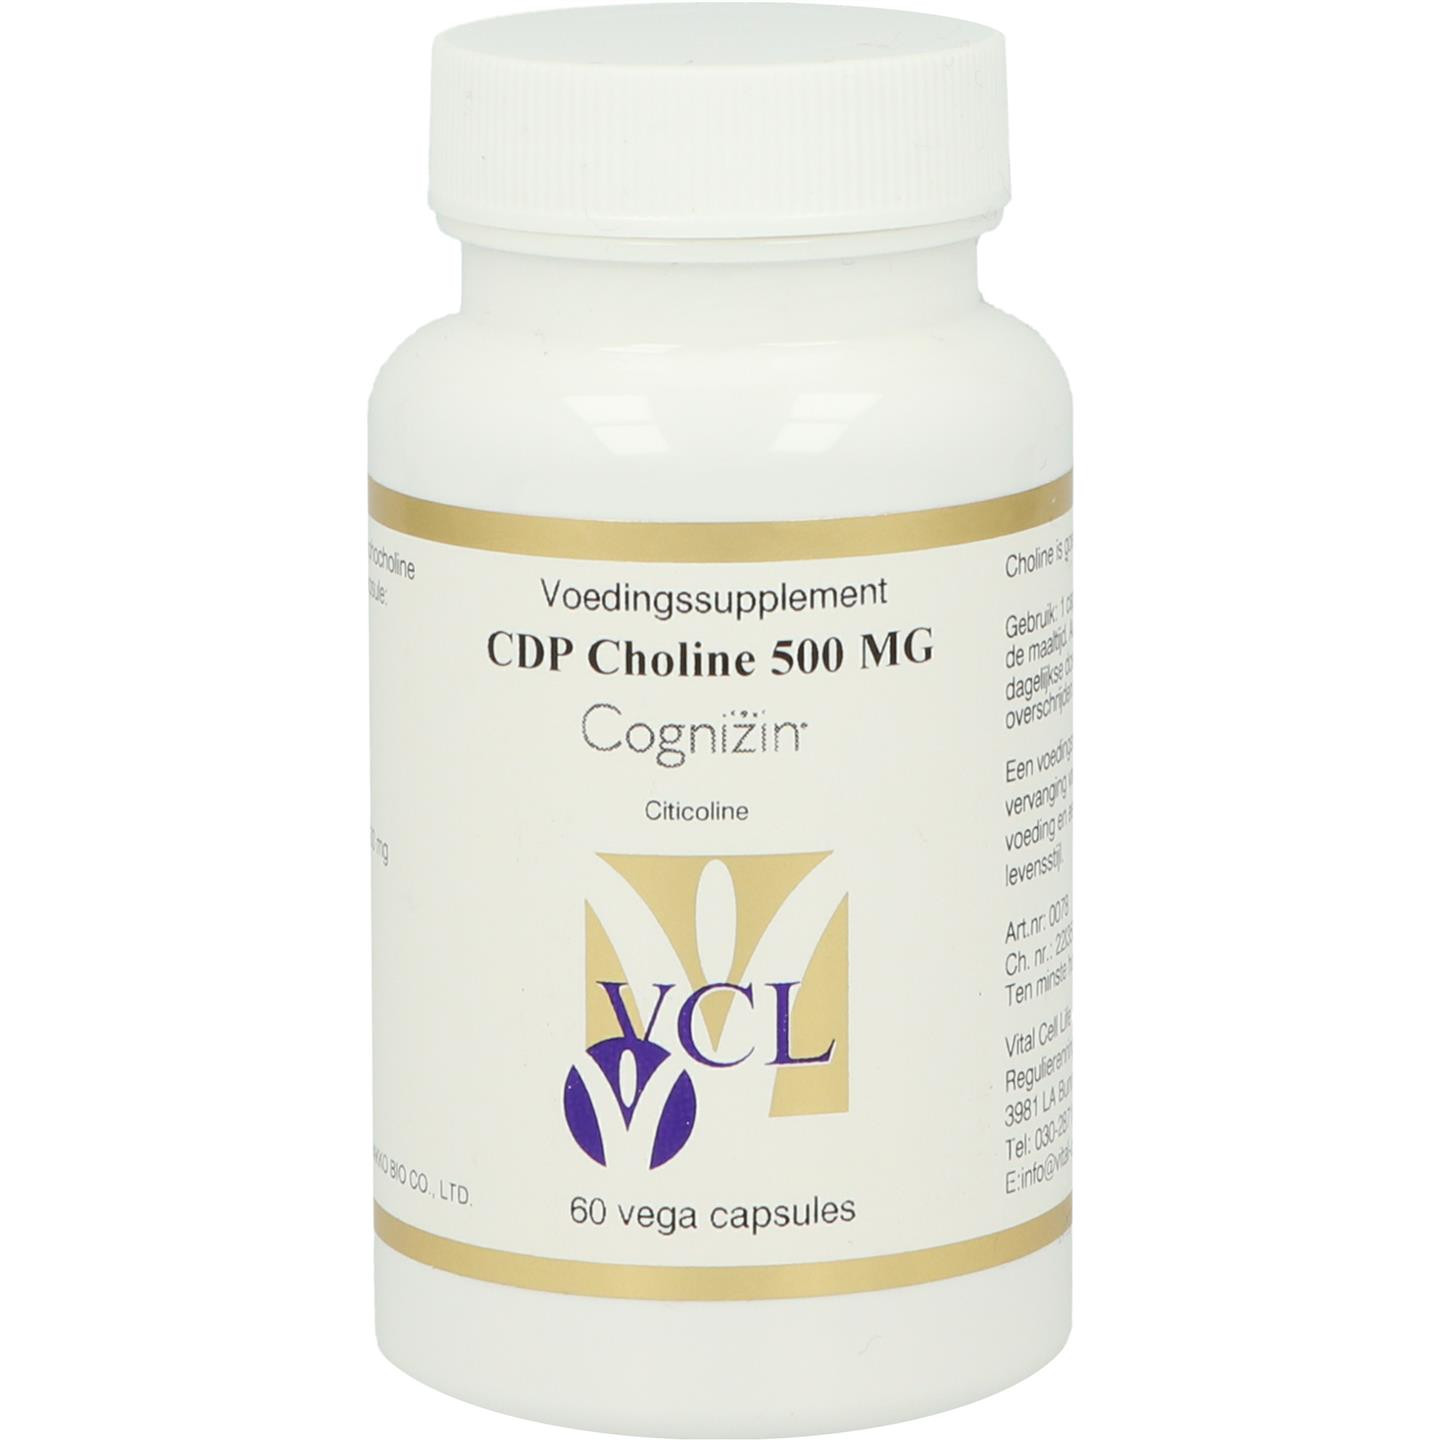 CDP Choline 500 mg